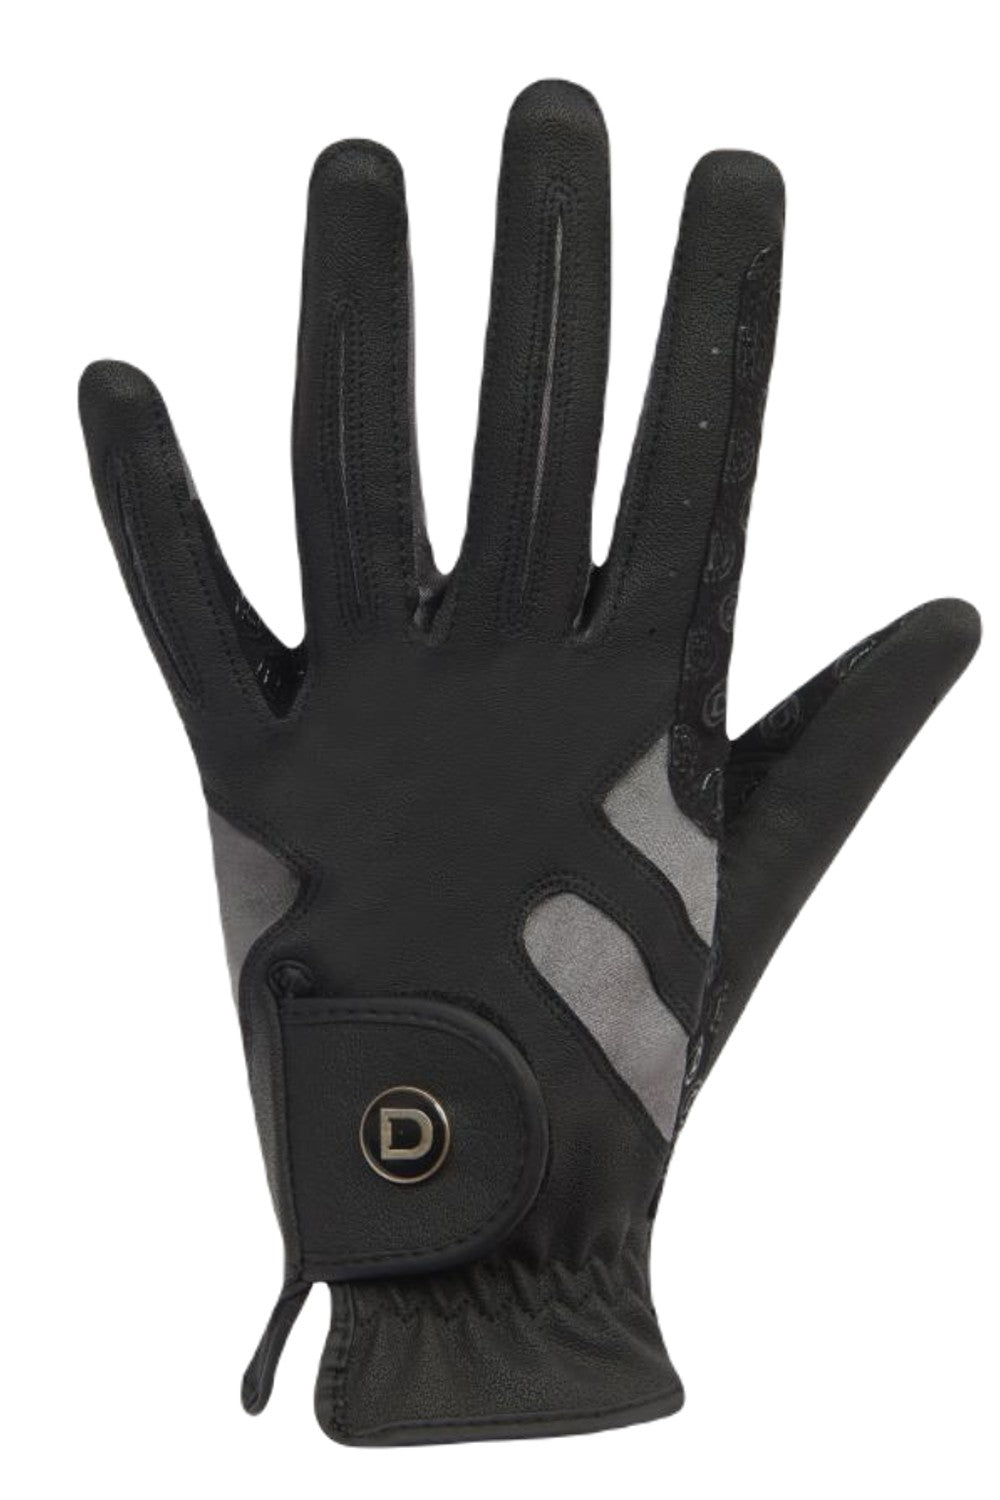 Dublin Cool-It Gel Riding Gloves In Black/Grey Front 